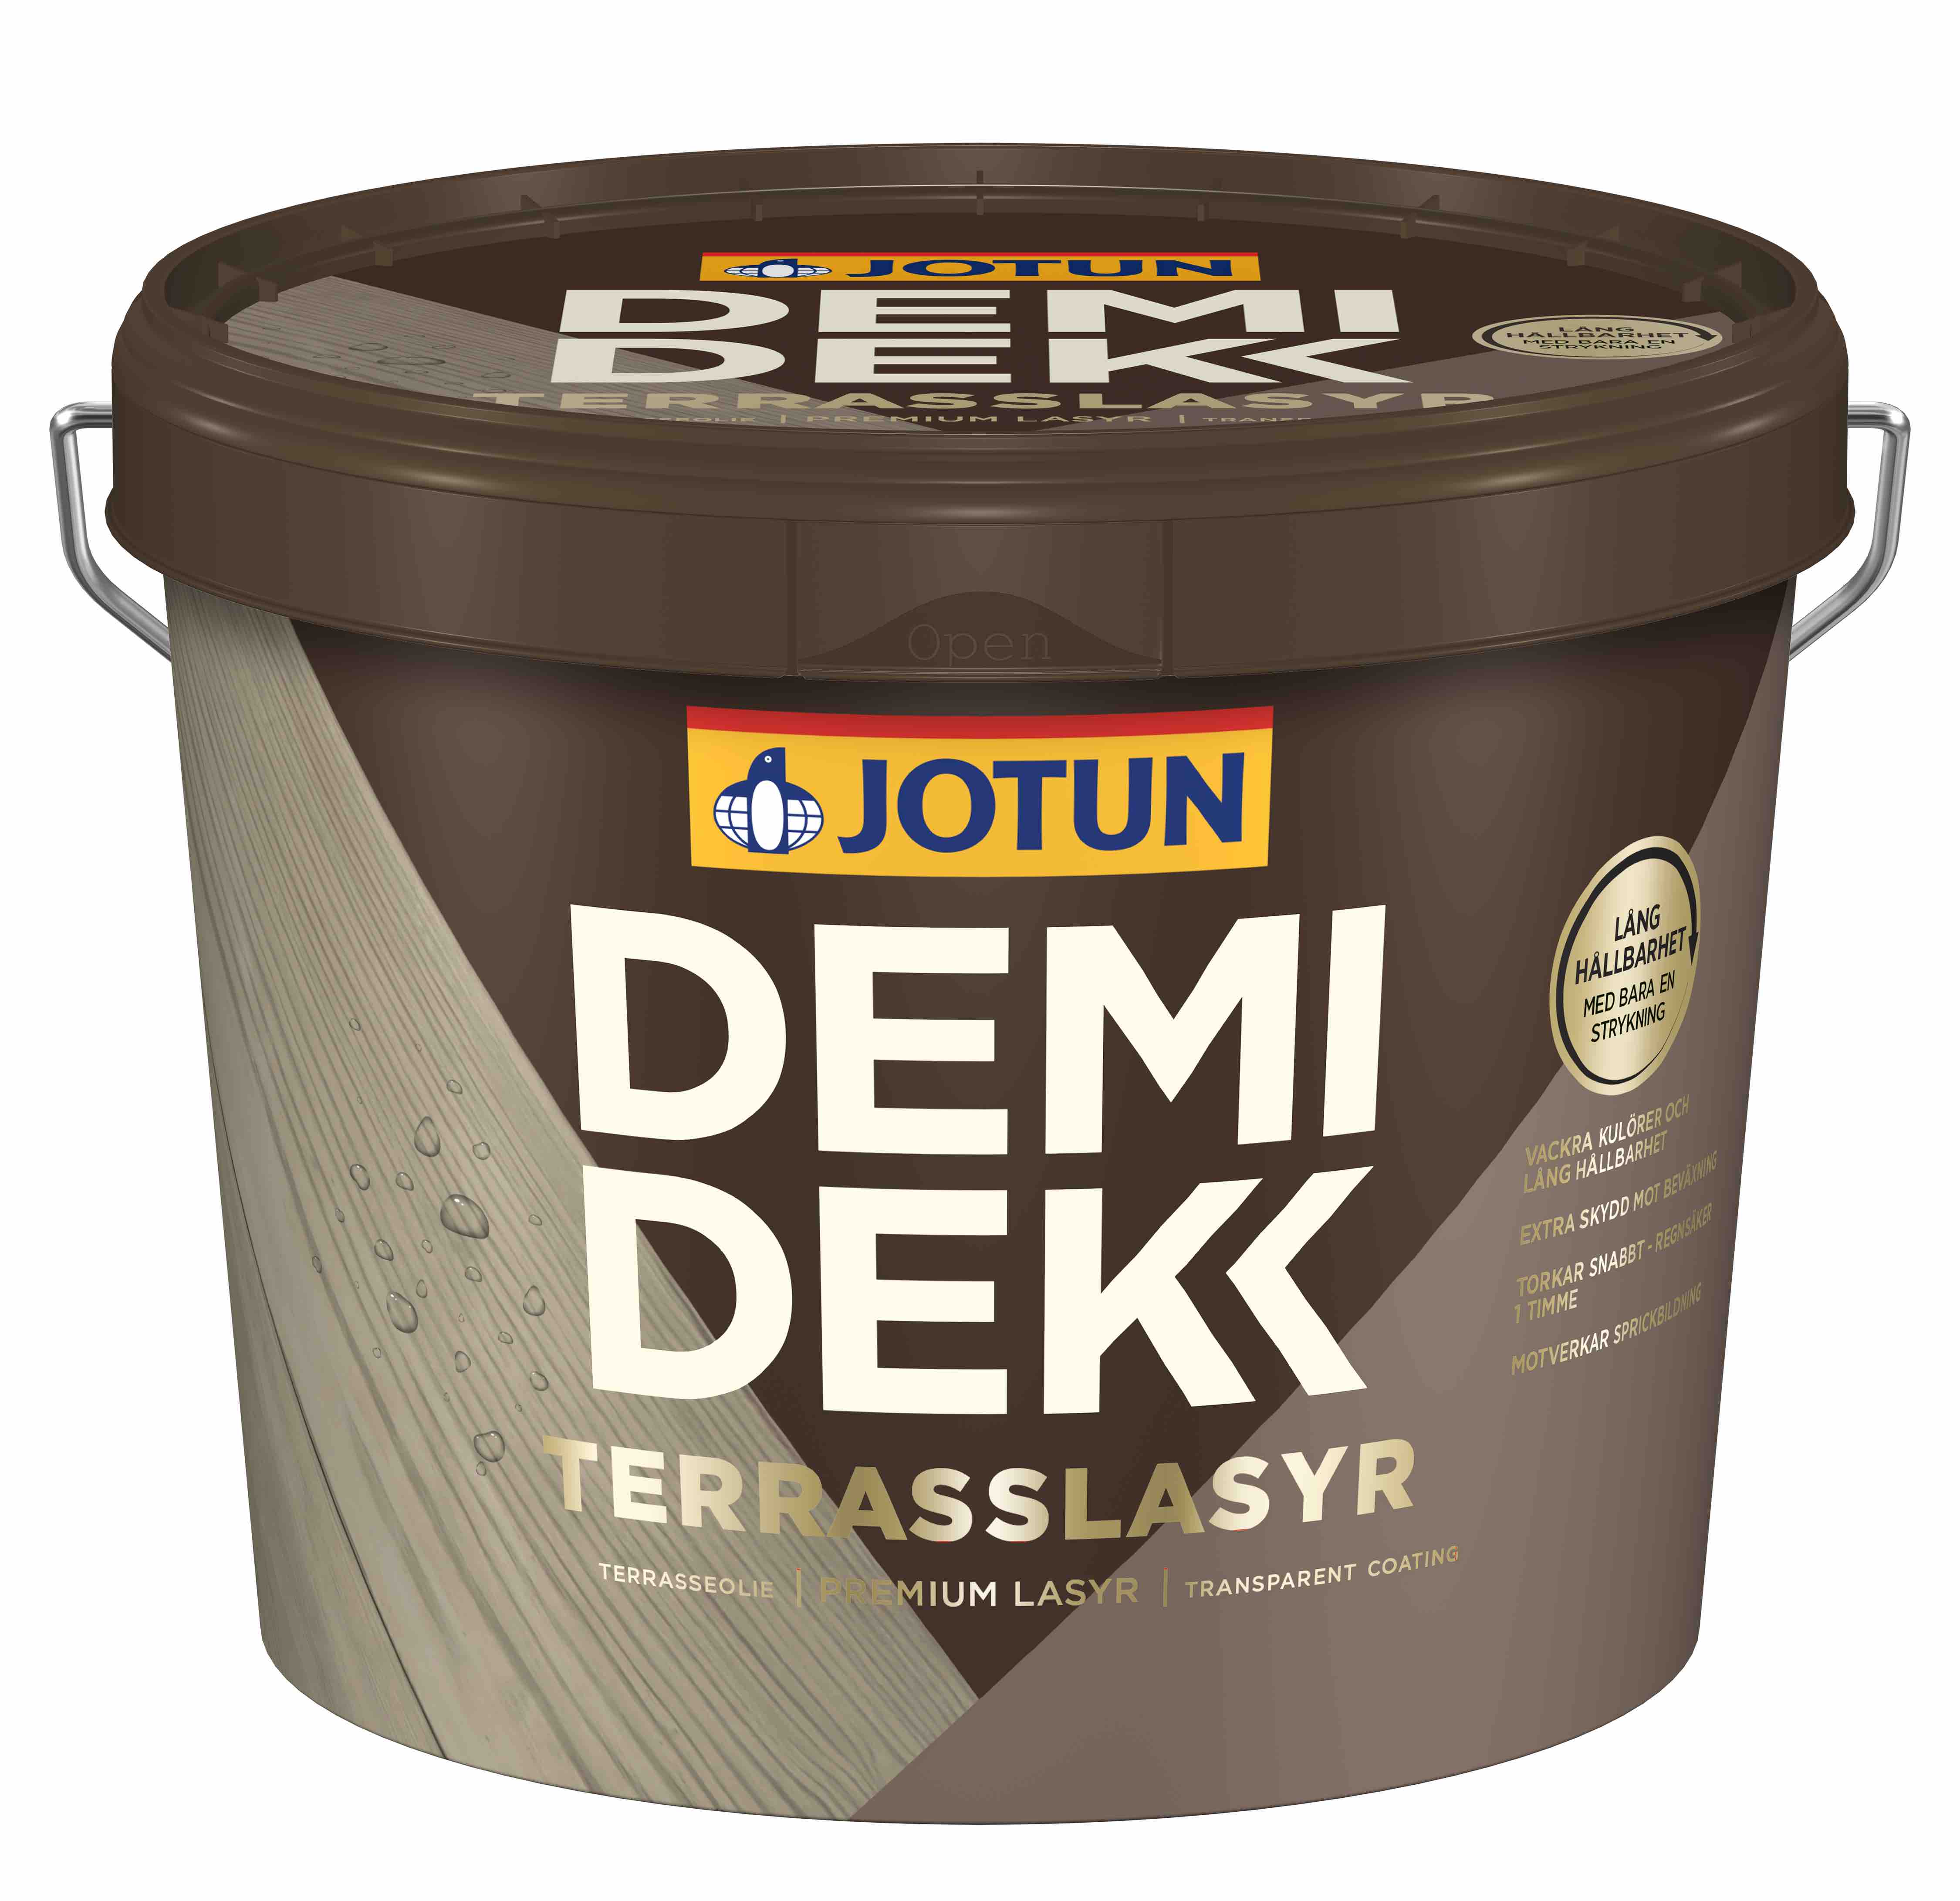 Nieuwe verpakking Jotun Demidekk Terrasslasyr